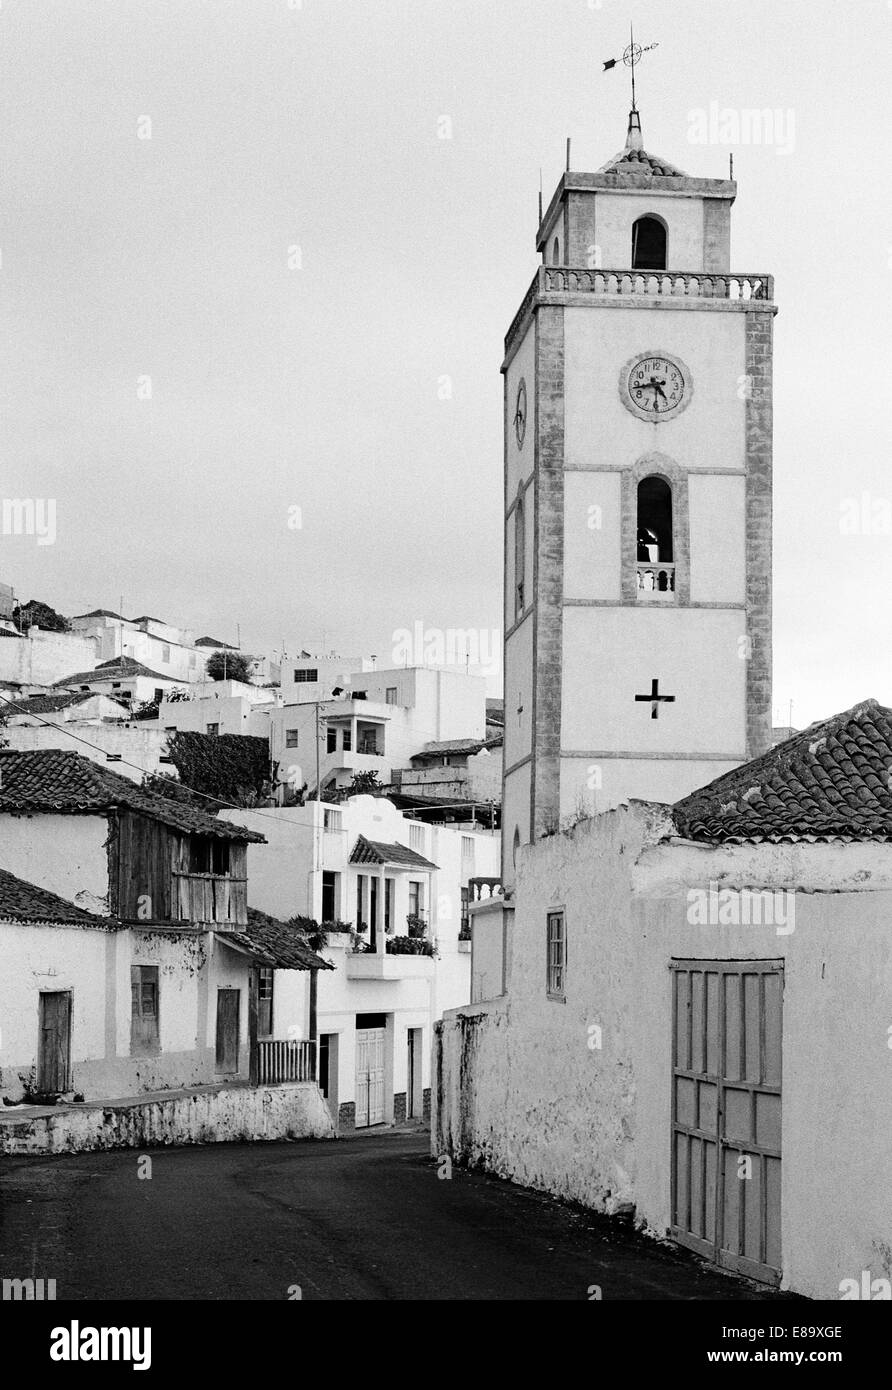 Achtziger Jahre, Kirche San Antonio de Padua und Altstadthaeuser à El Tanque, Teneriffa, Kanarische Inseln, Spanien Banque D'Images